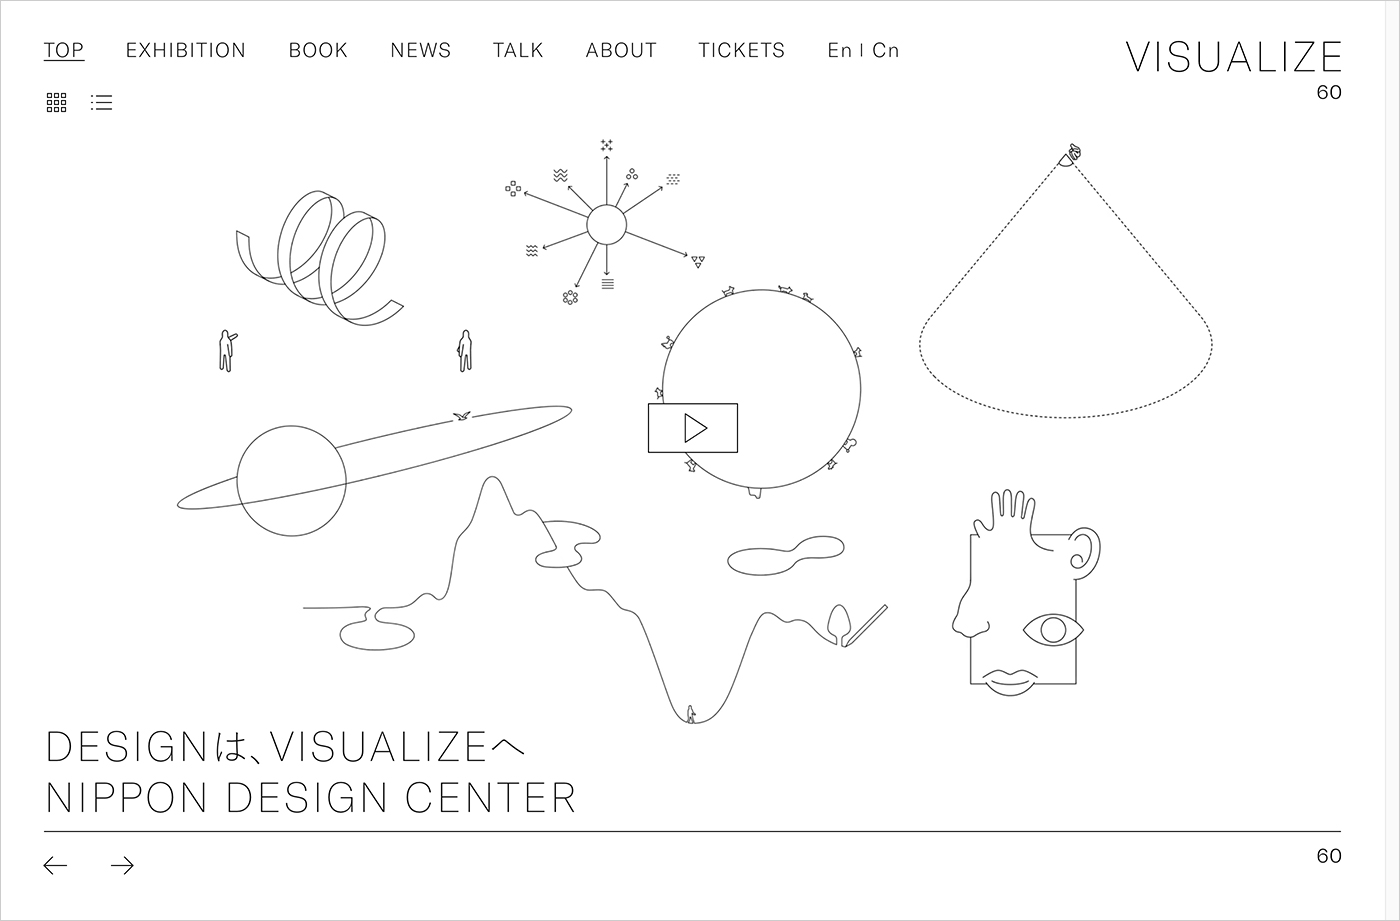 VISUALIZE 60 | 日本デザインセンターウェブサイトの画面キャプチャ画像